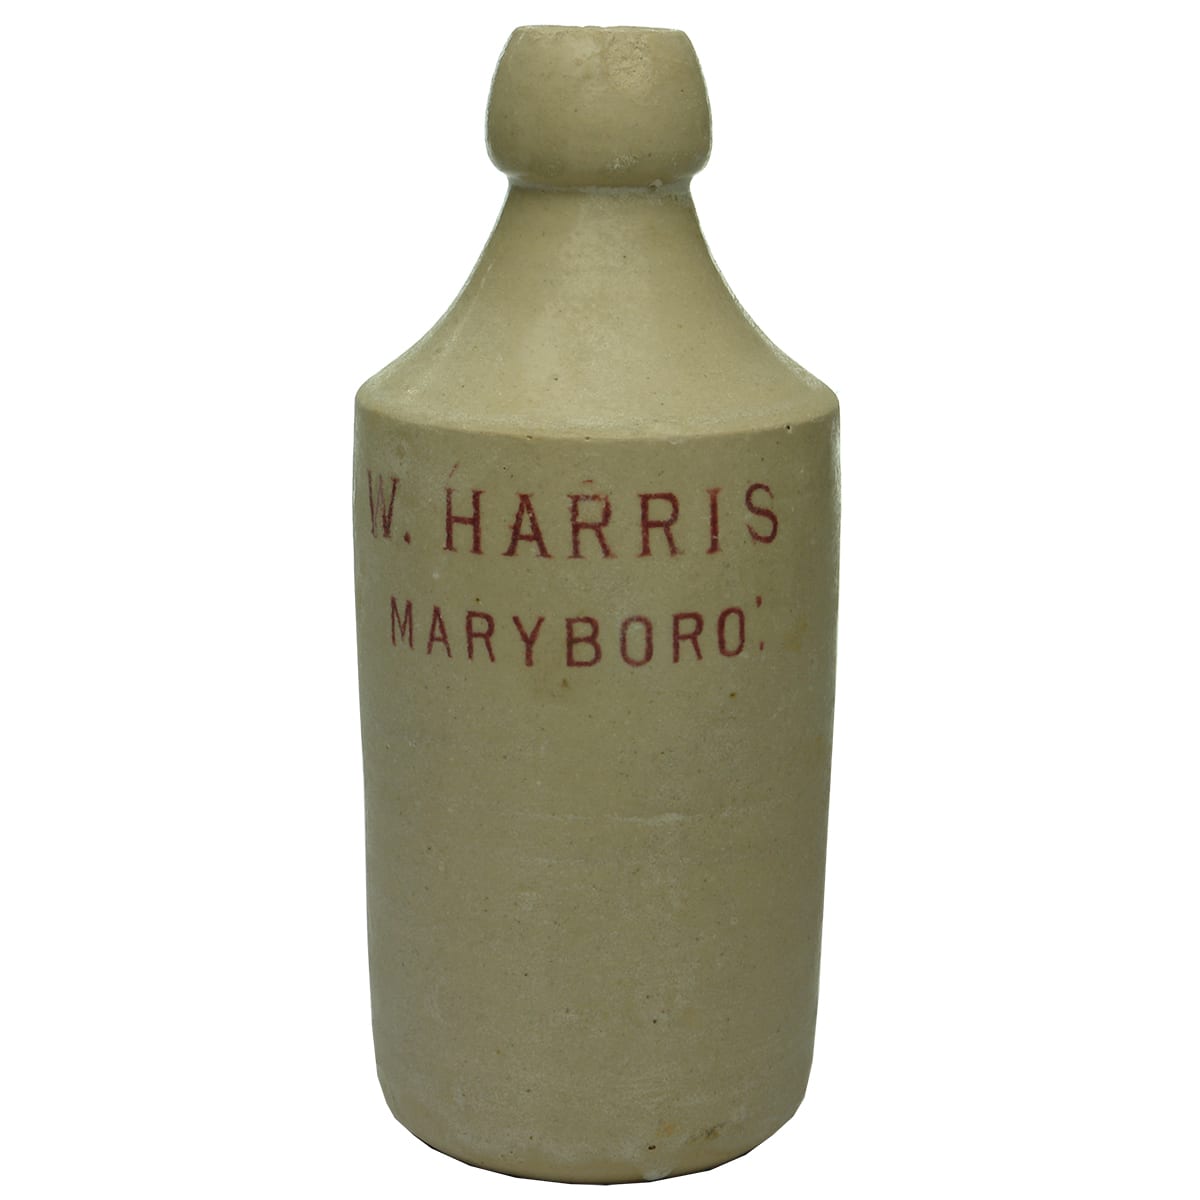 Ginger Beer. W. Harris, Maryboro'. Glasgow pottery. Red Print. (Maryborough, Queensland)